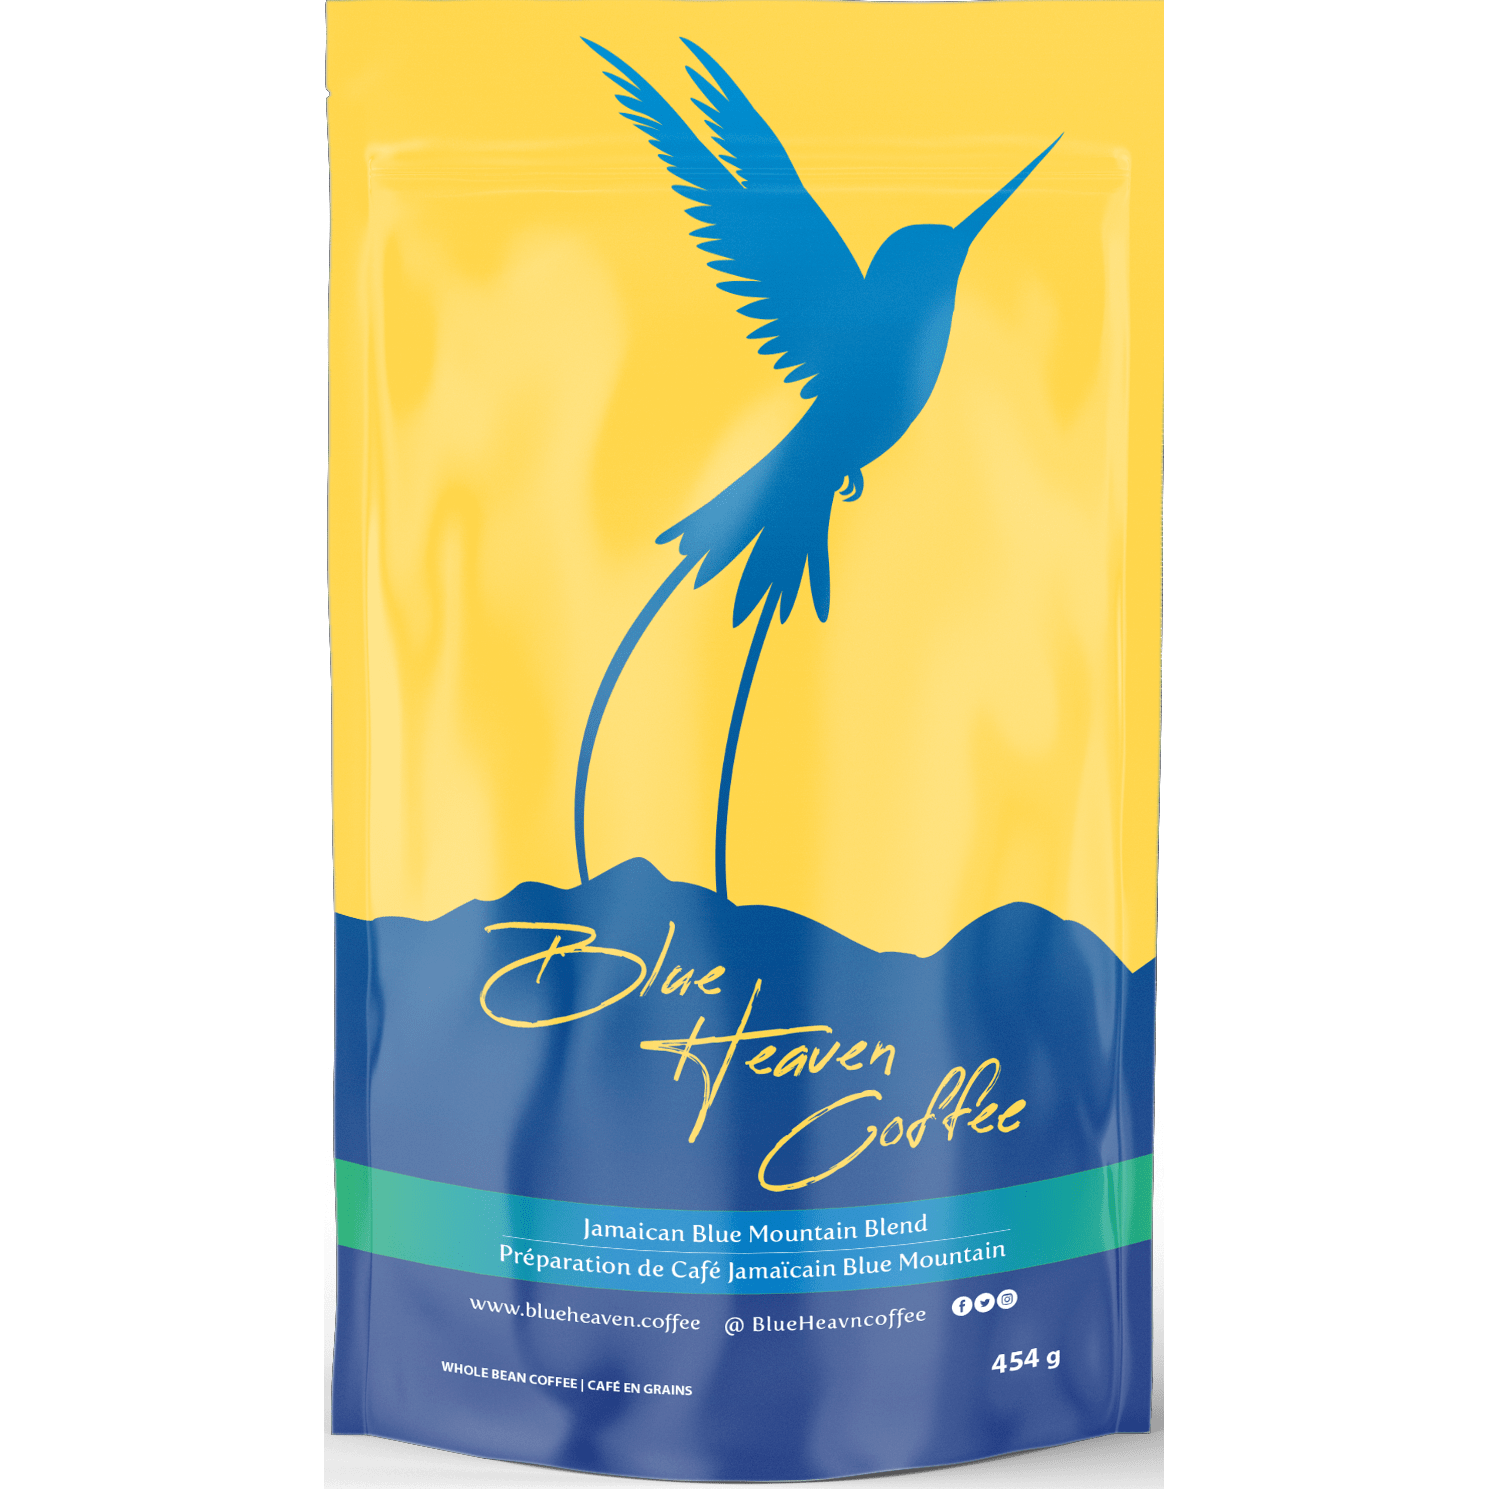 Blue Heaven Hemp Infused Coffee - Premium Jamaican Blue Mountain Coffee Blend - Dark Roast 1lb